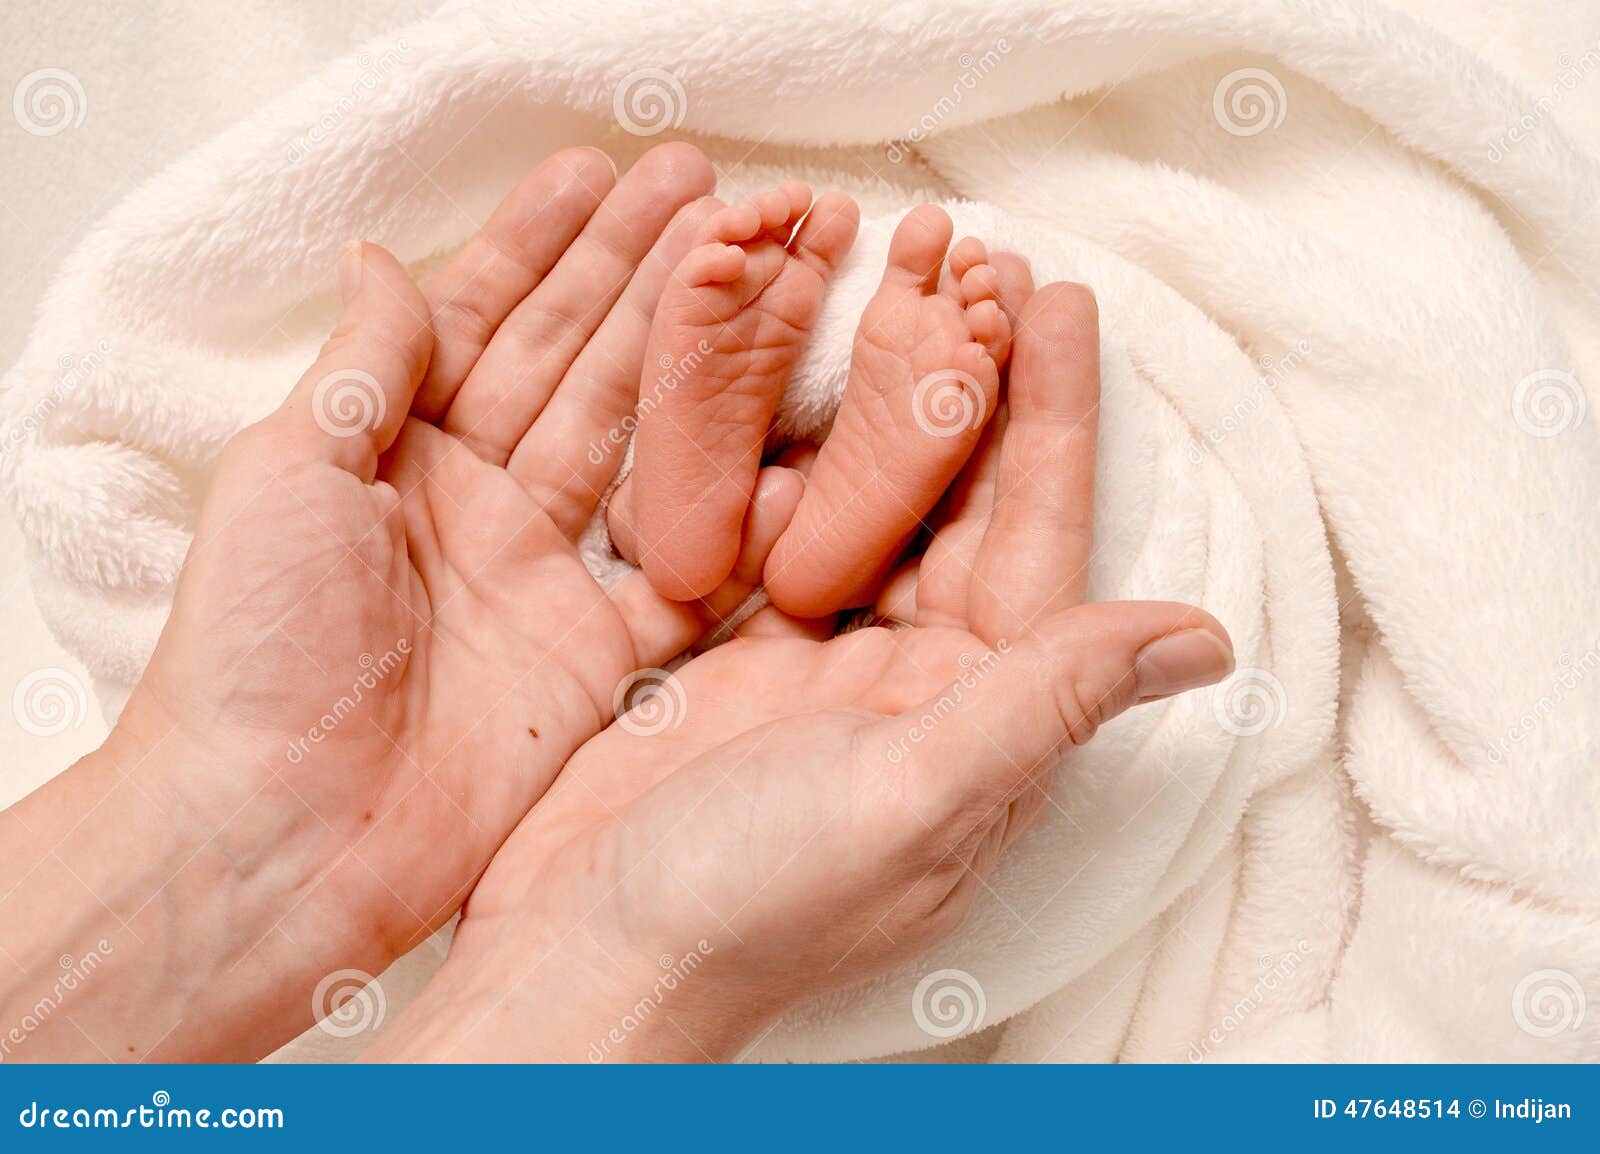 new-born baby feet in moms hand.